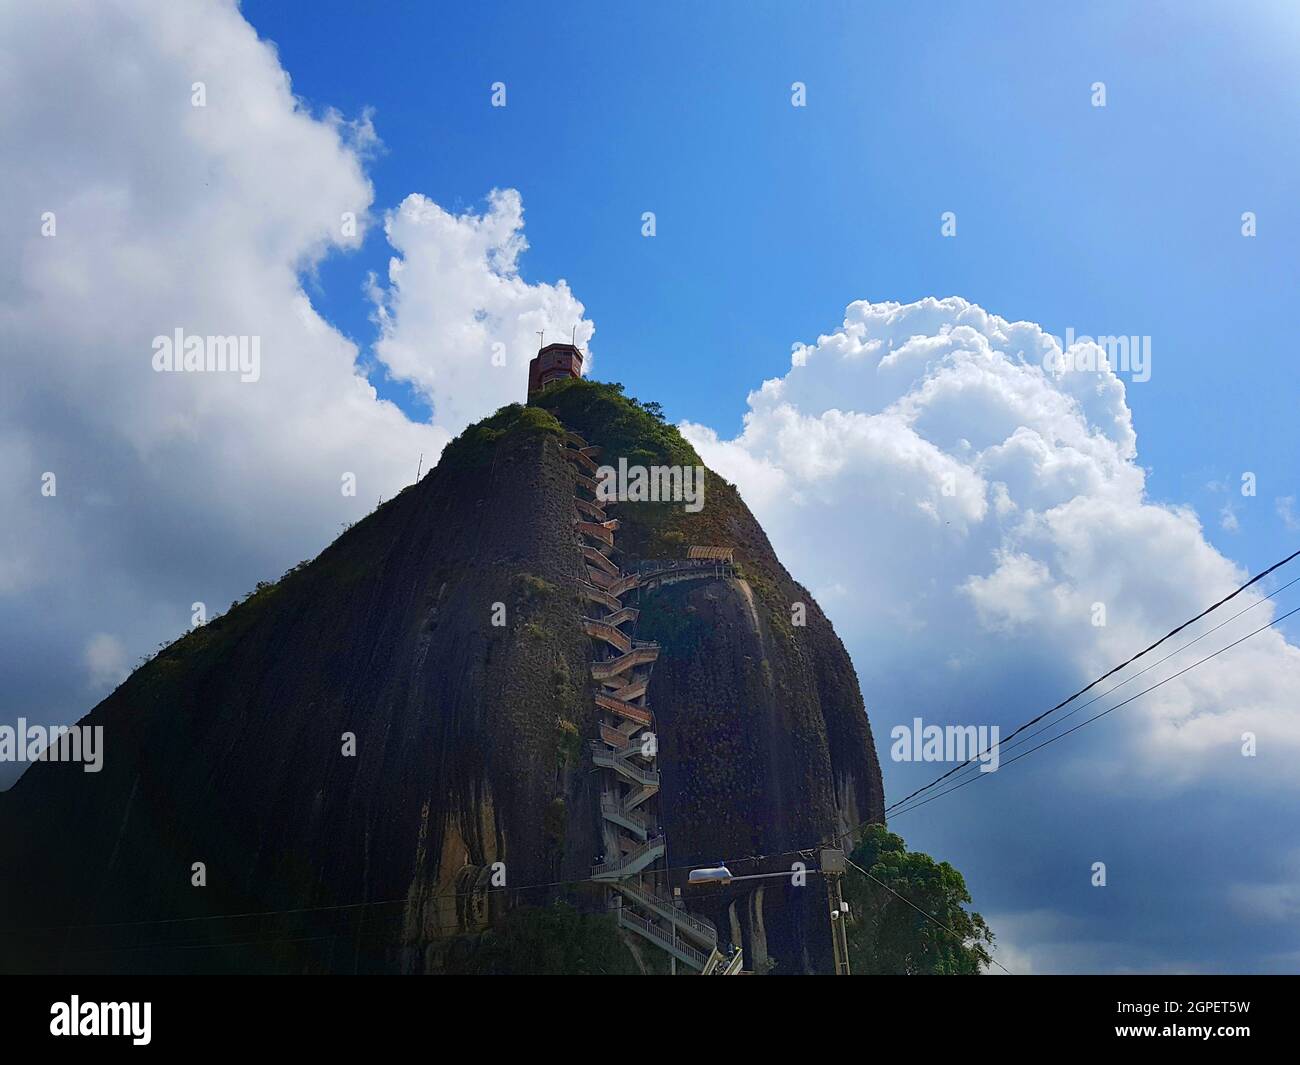 Closeup shot of El Penon de Guatape under a blue cloudy sky in Colombia Stock Photo